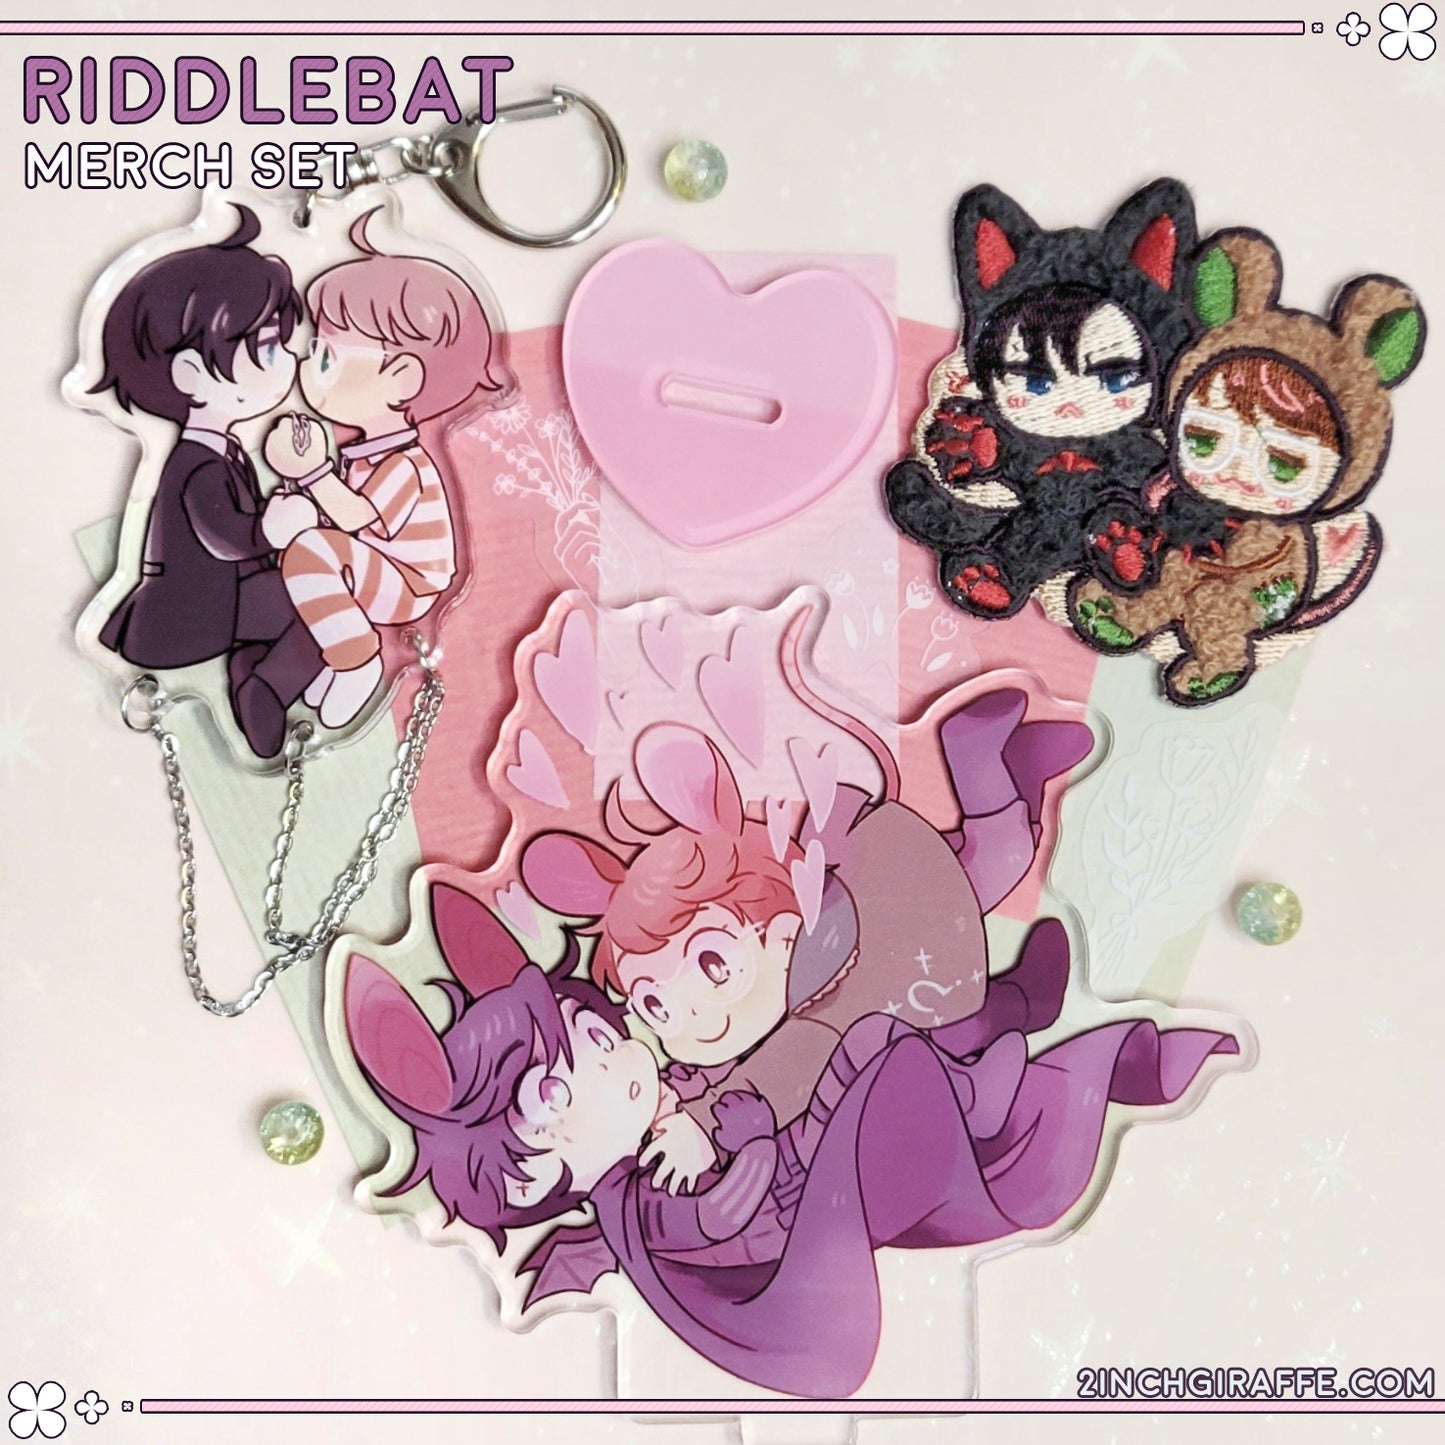 RiddleBat Merch Set